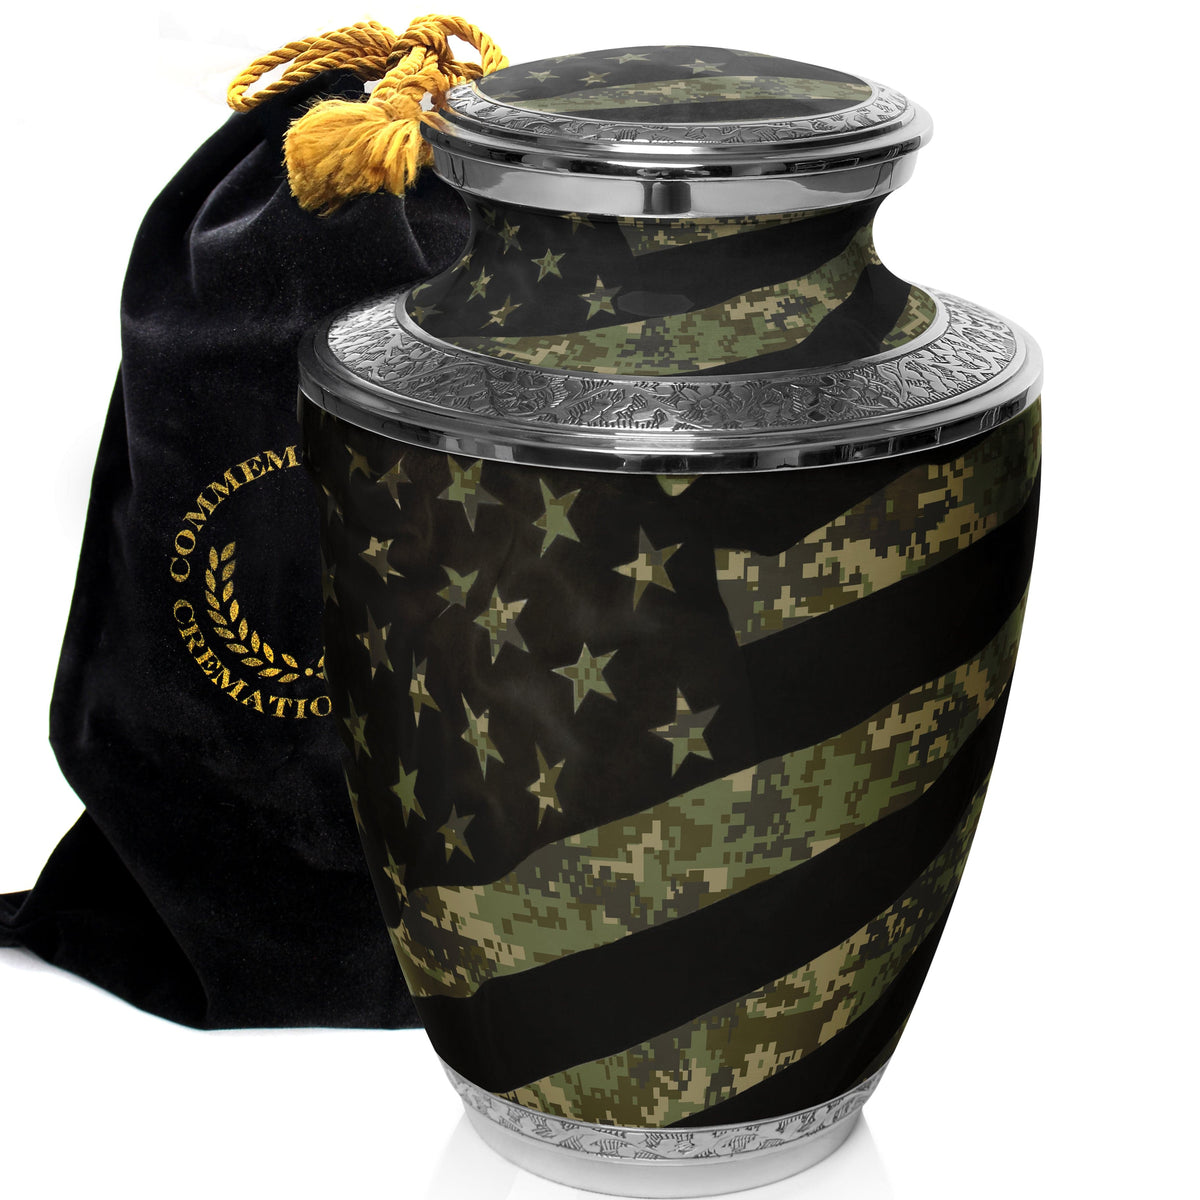 Commemorative Cremation Urns Home &amp; Garden Digital Camouflage Flag Military Cremation Urn